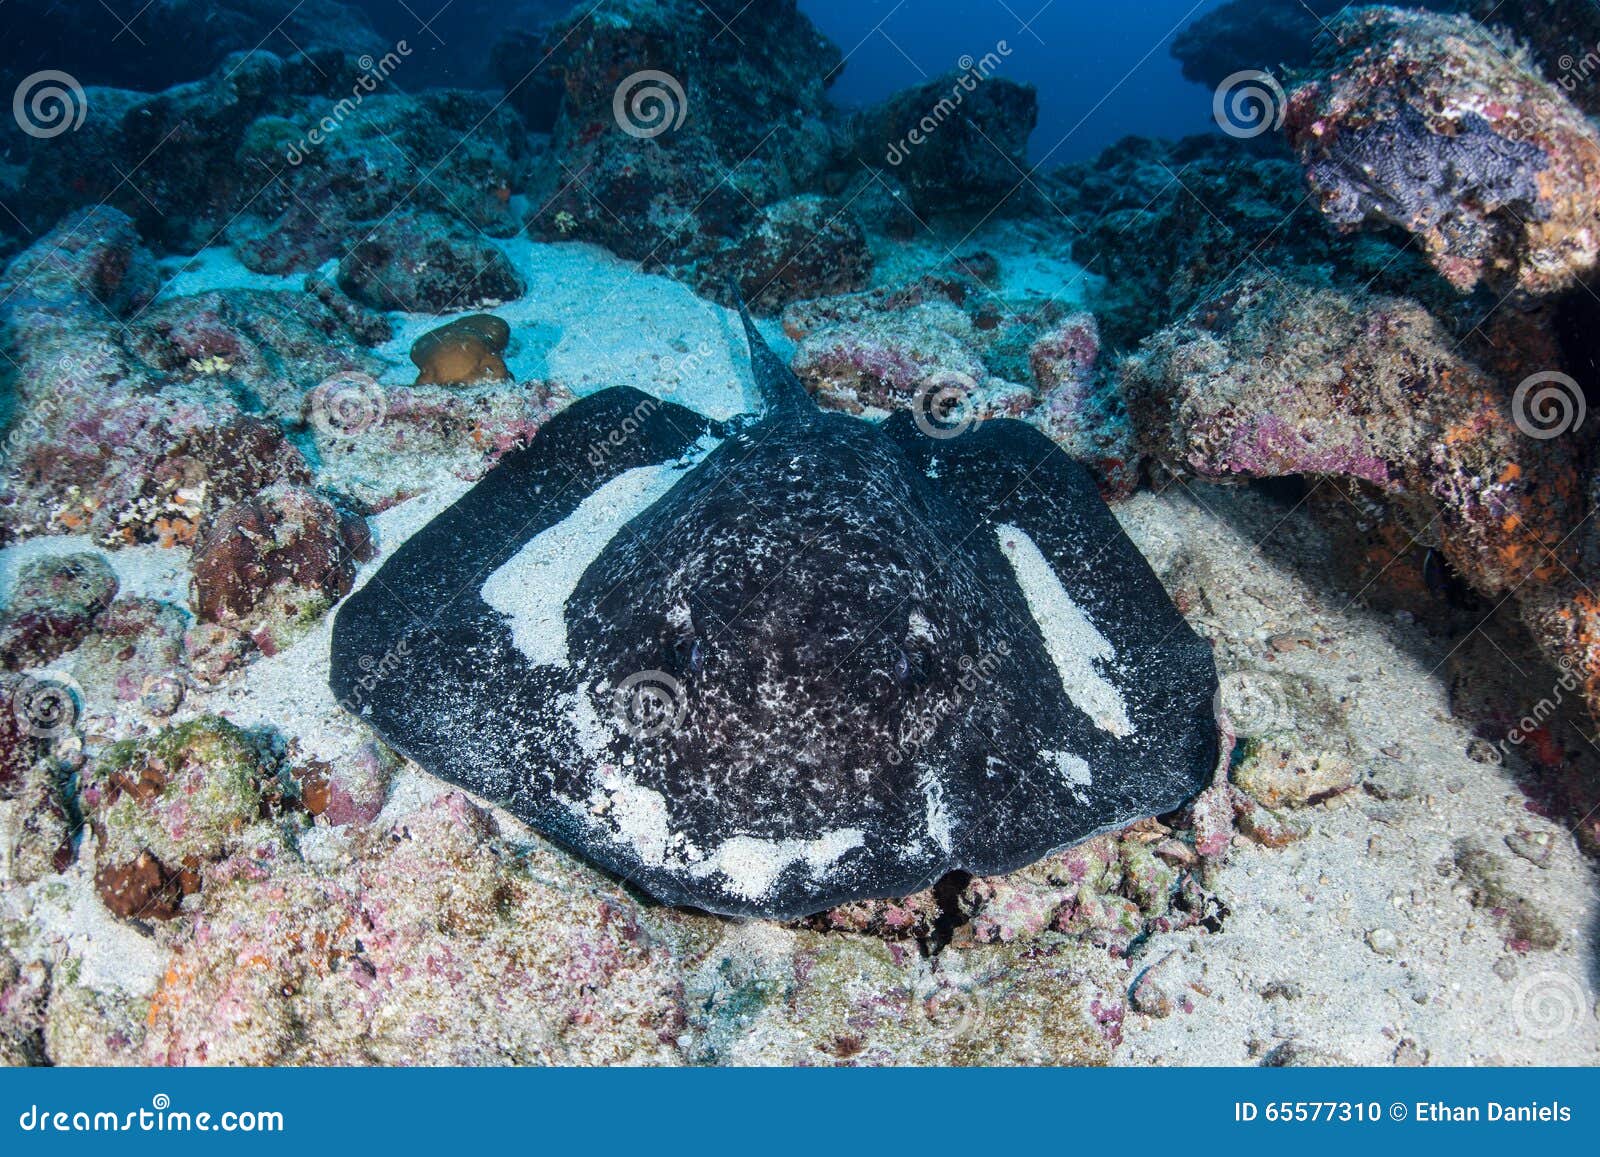 black-blotched stingray on seafloor